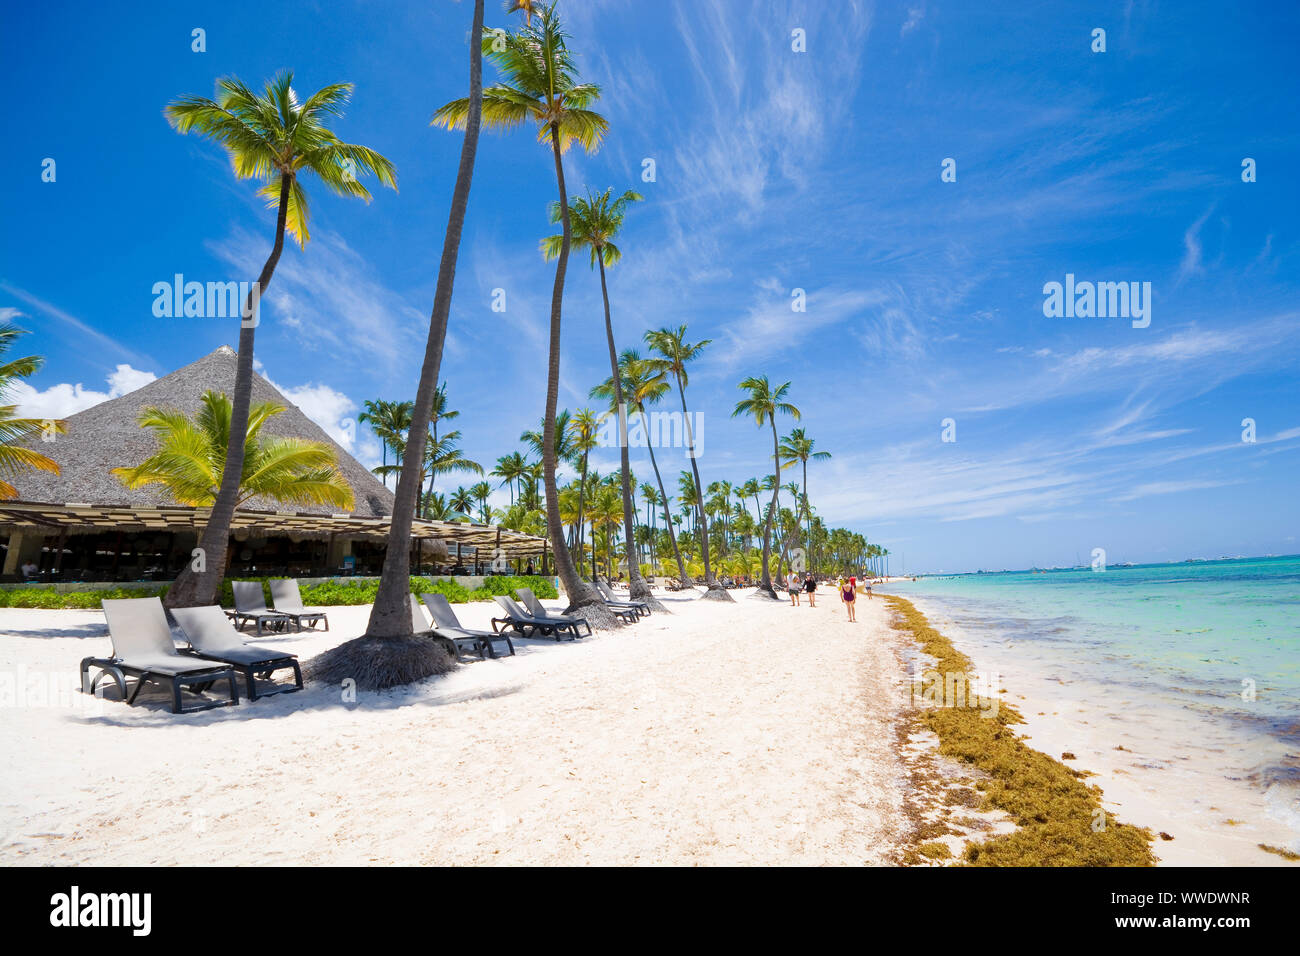 Tropical beach in Sargasso sea, Punta Cana, Dominican Republic Stock Photo